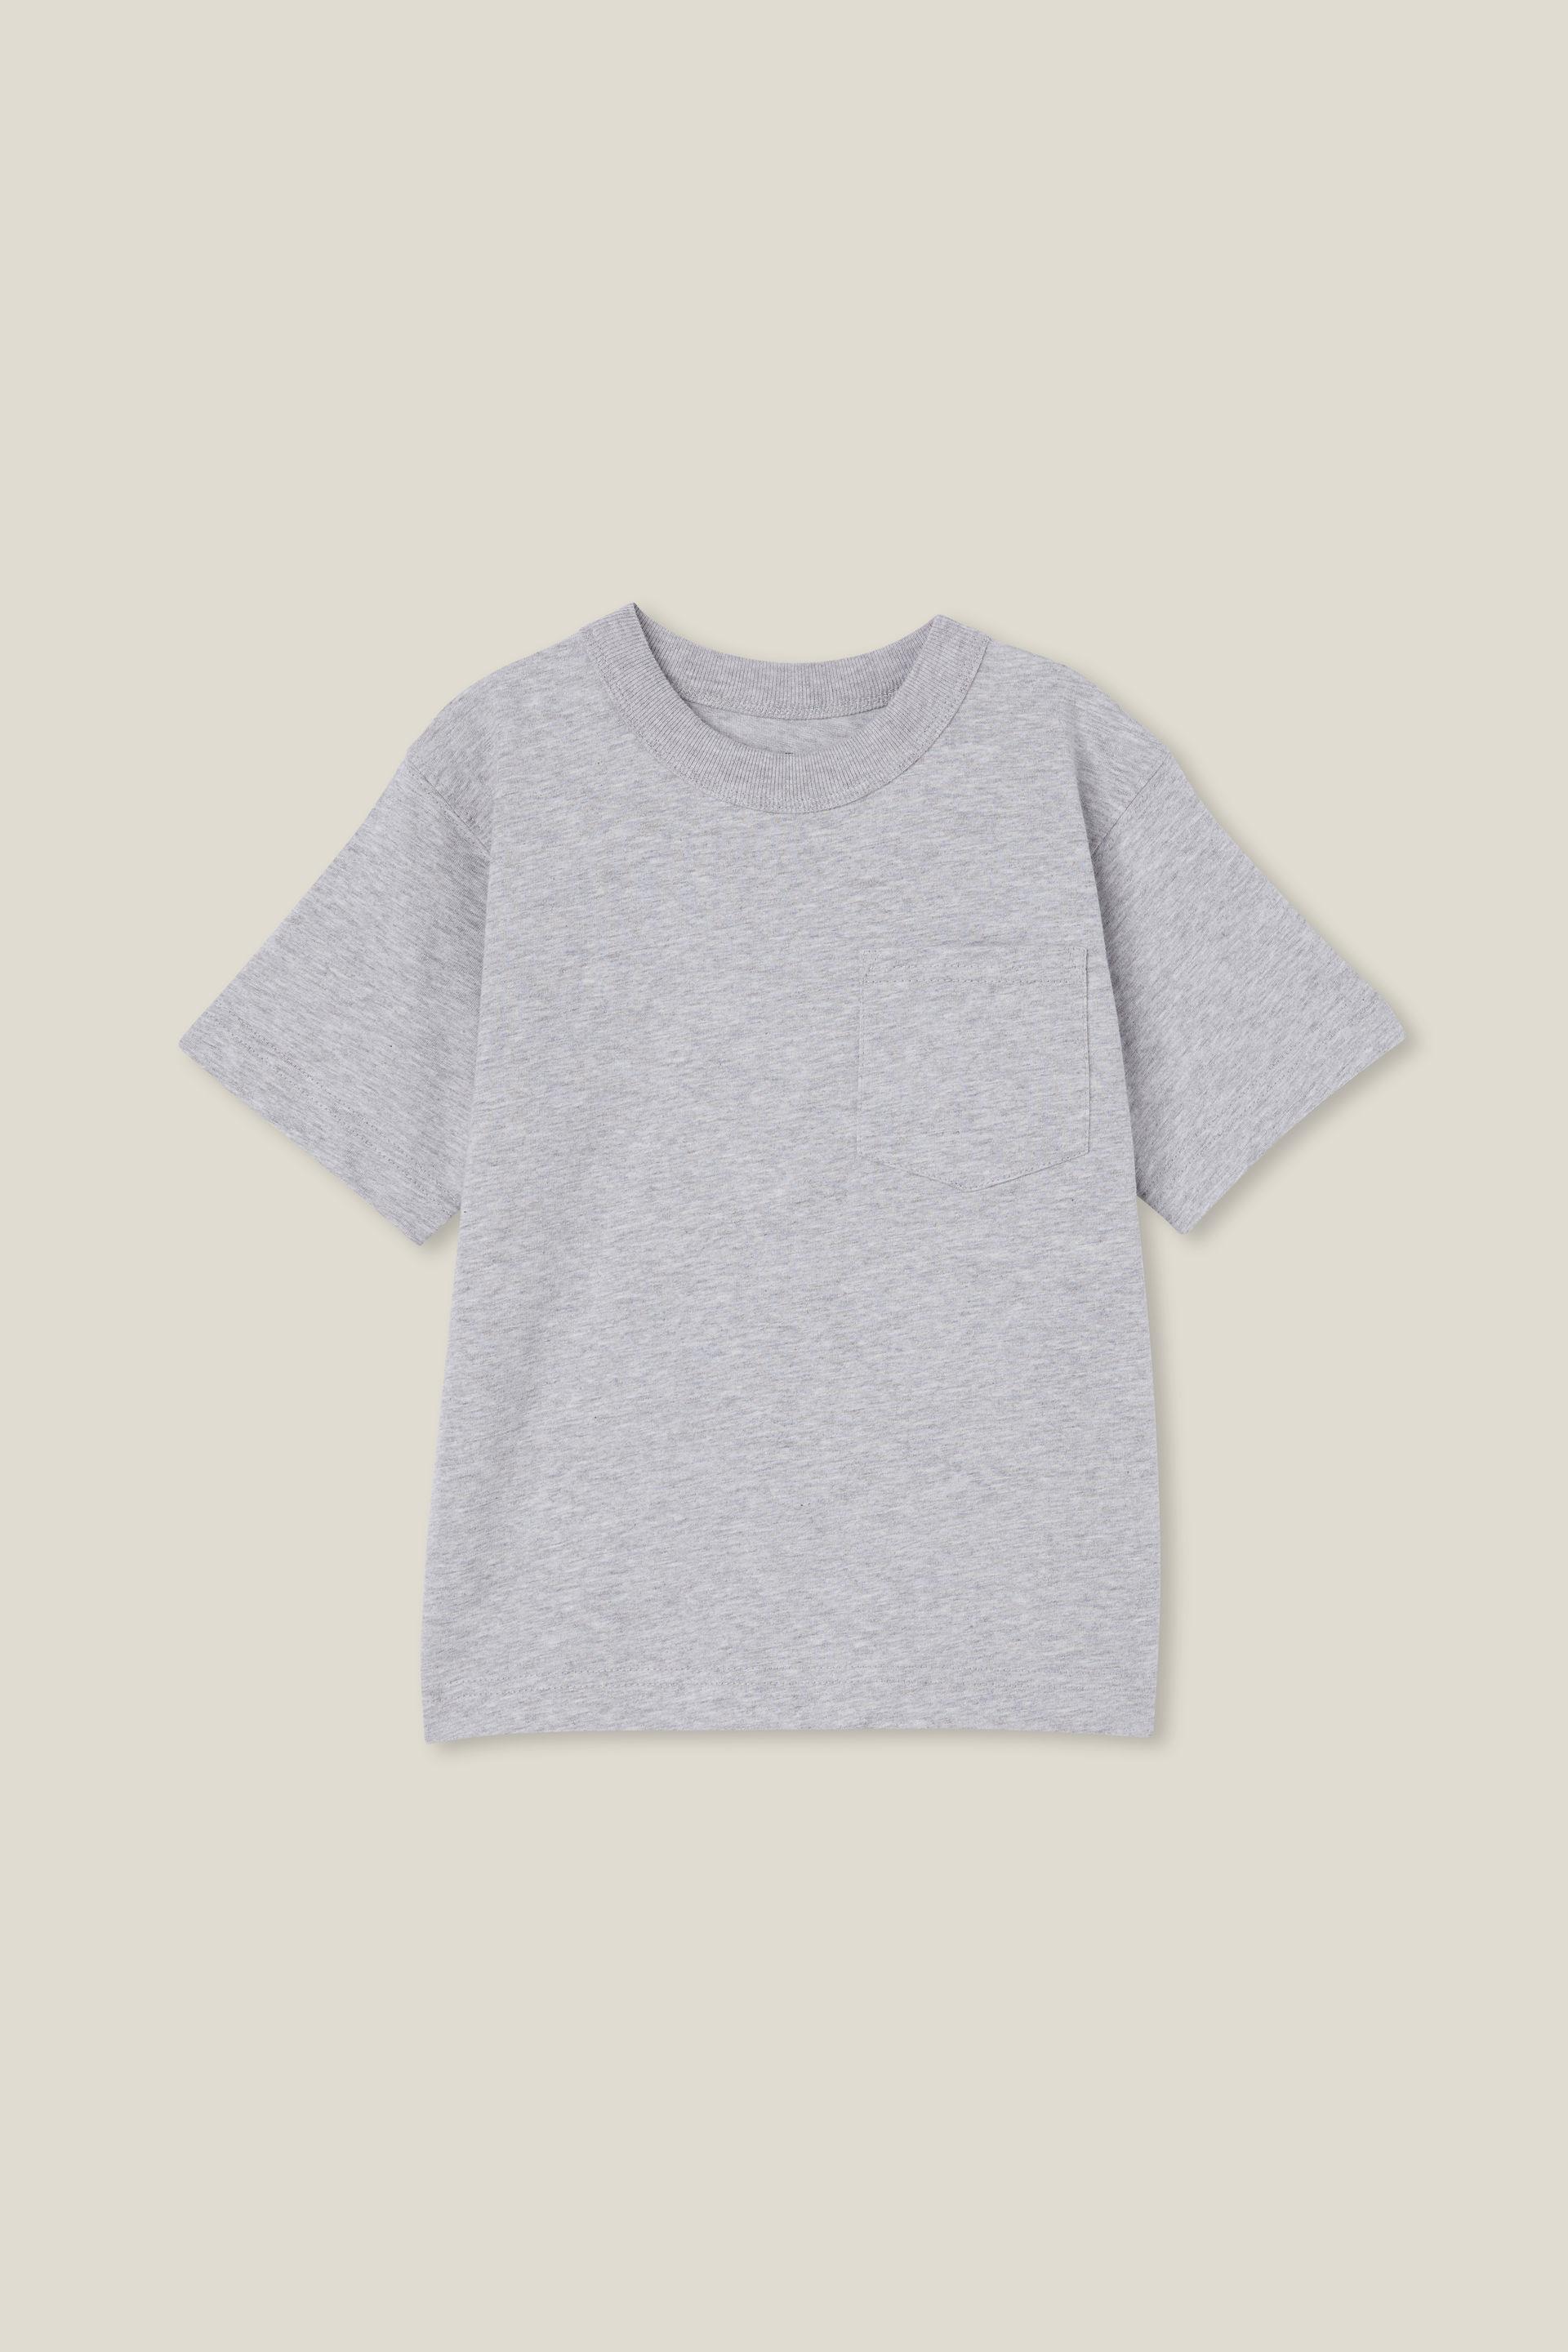 Cotton On Kids - The Essential Short Sleeve Tee - Fog grey marle